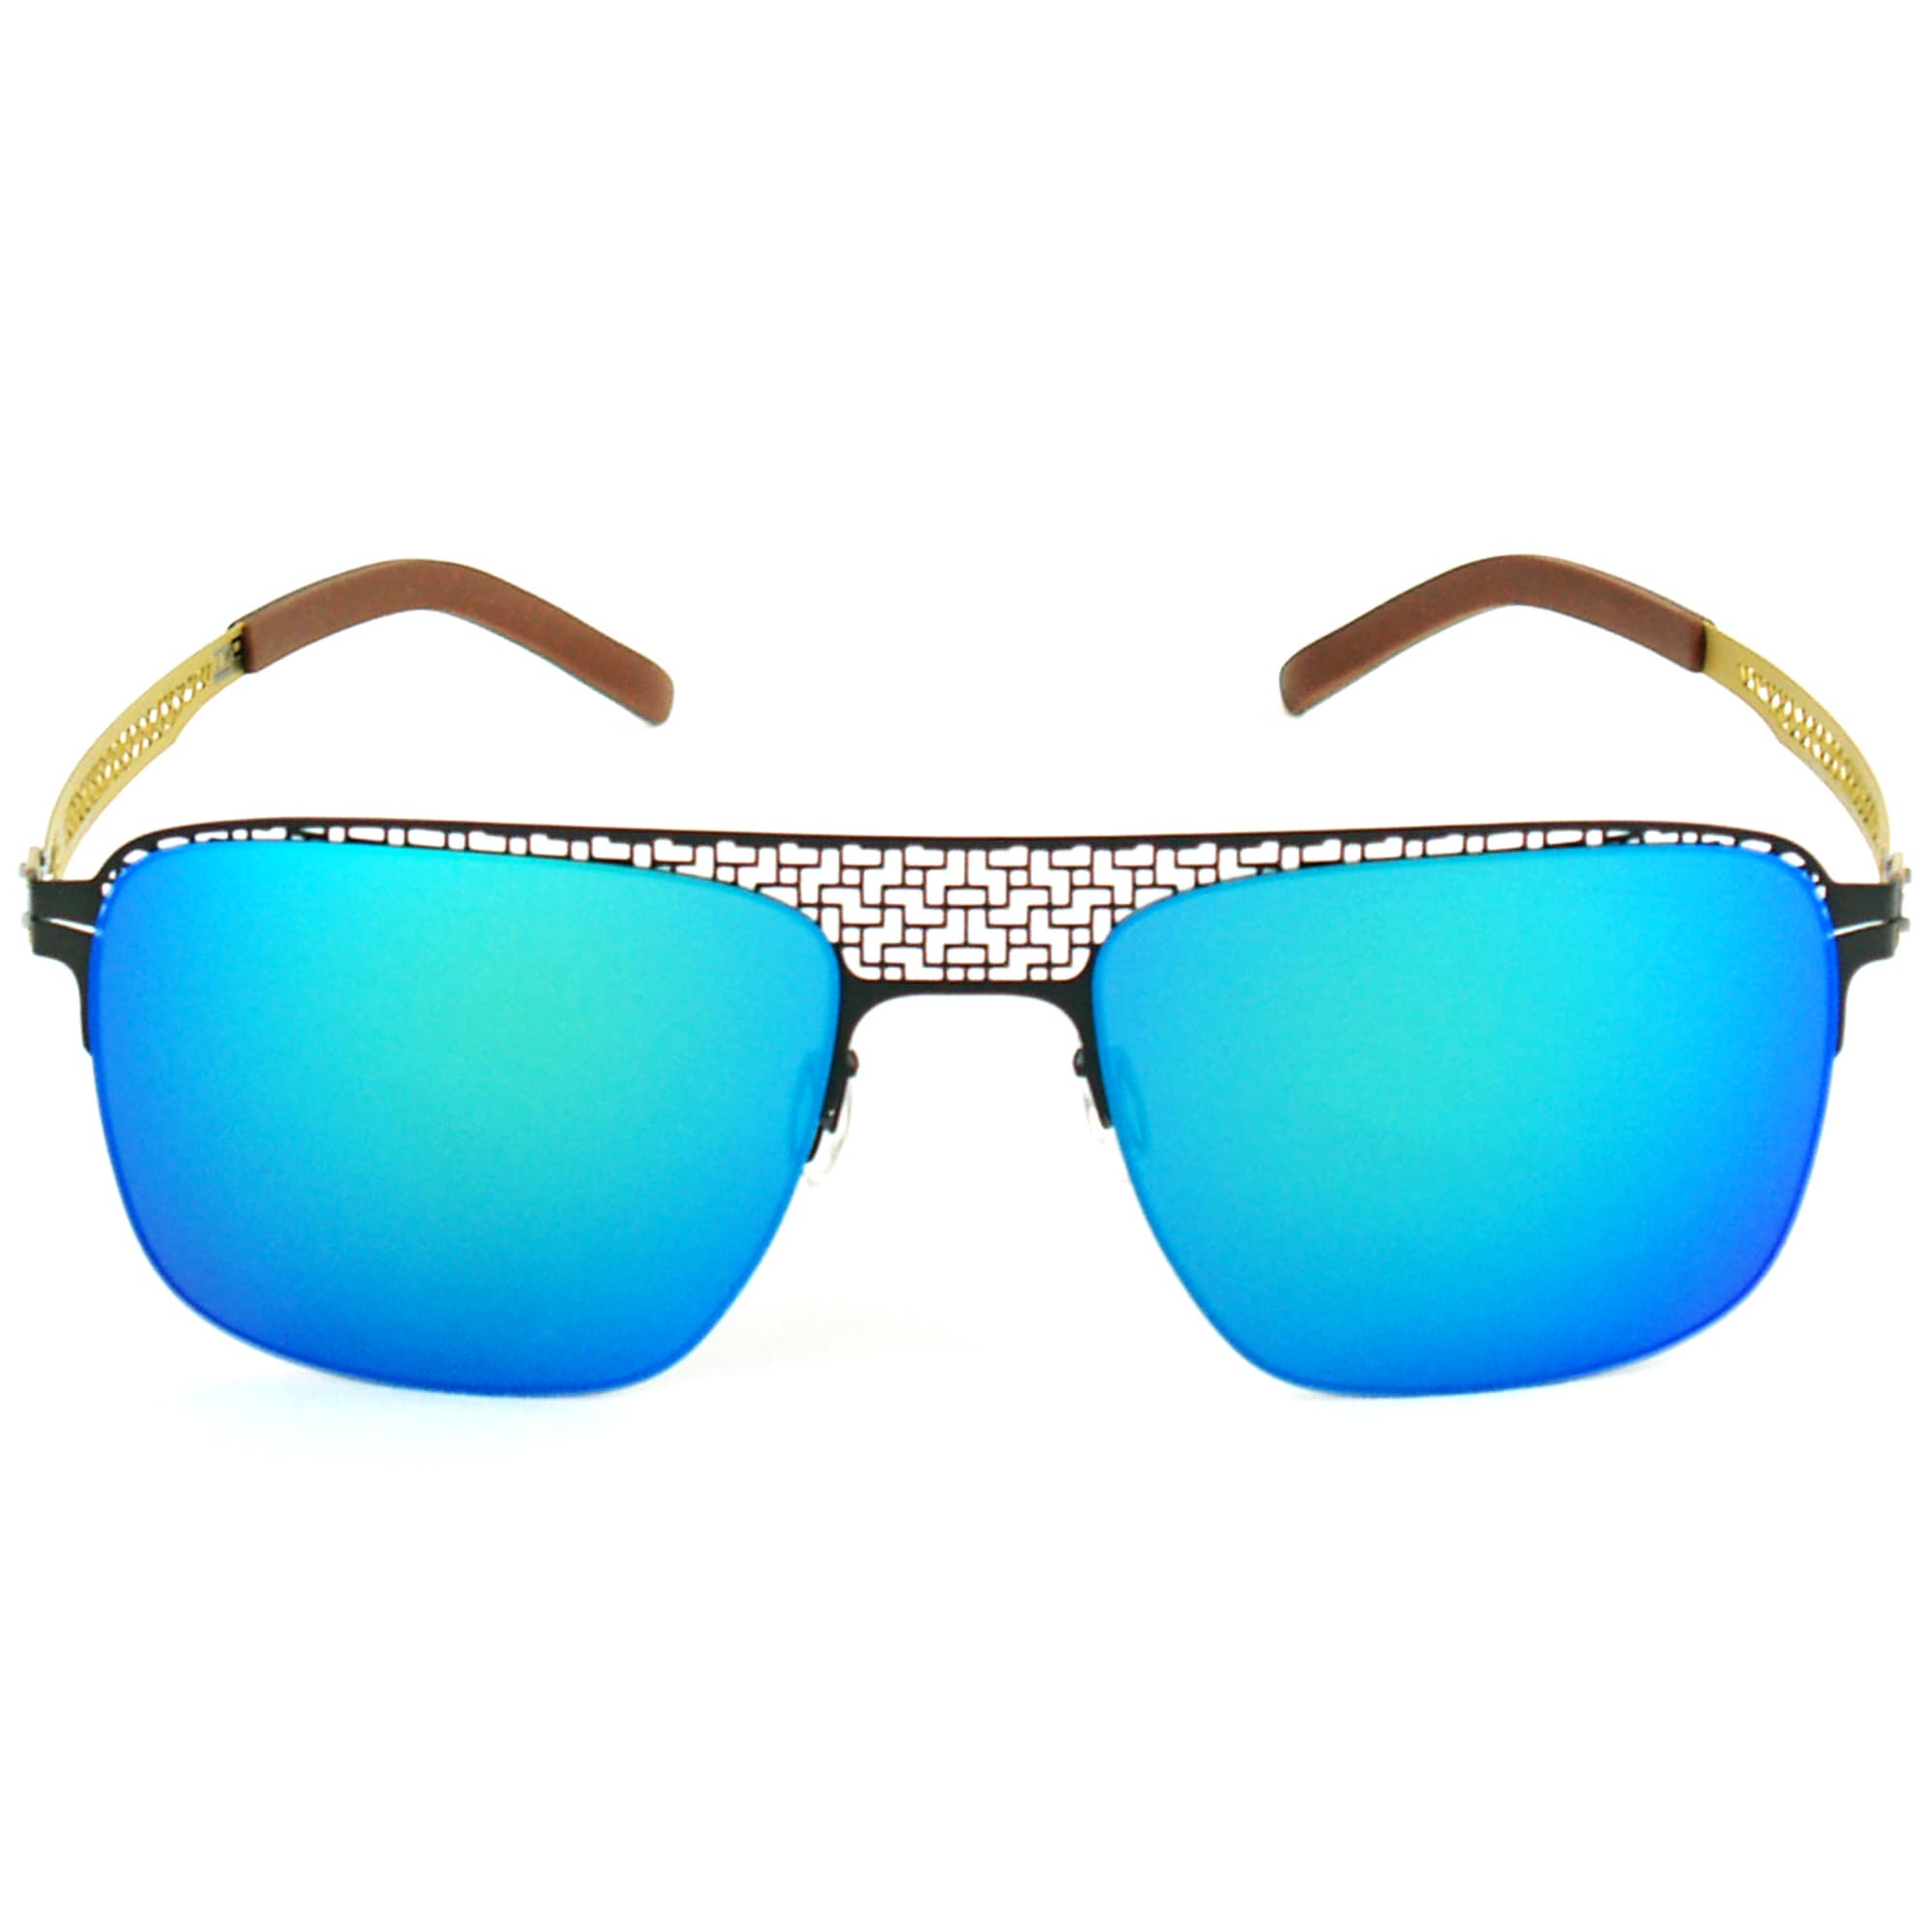 FigureII  Squared Design Thin Stainless Steel   Sunglasses